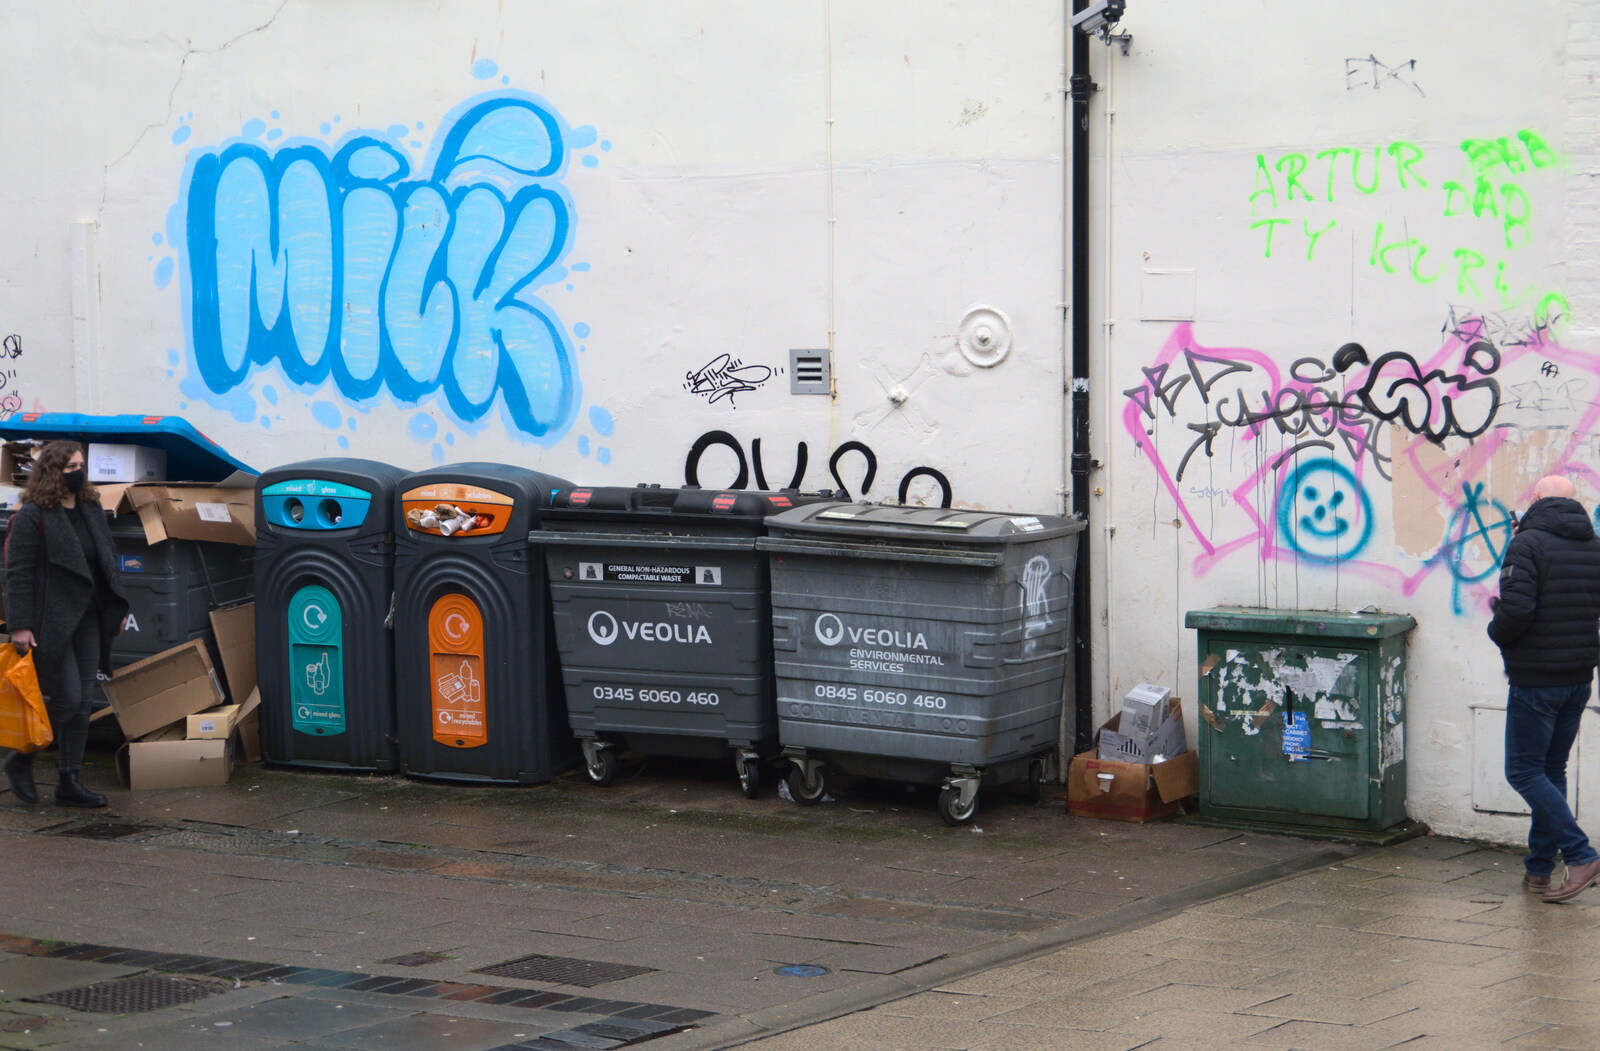 'Milk' graffiti from A Bit of Christmas Shopping, Norwich, Norfolk - 23rd December 2020